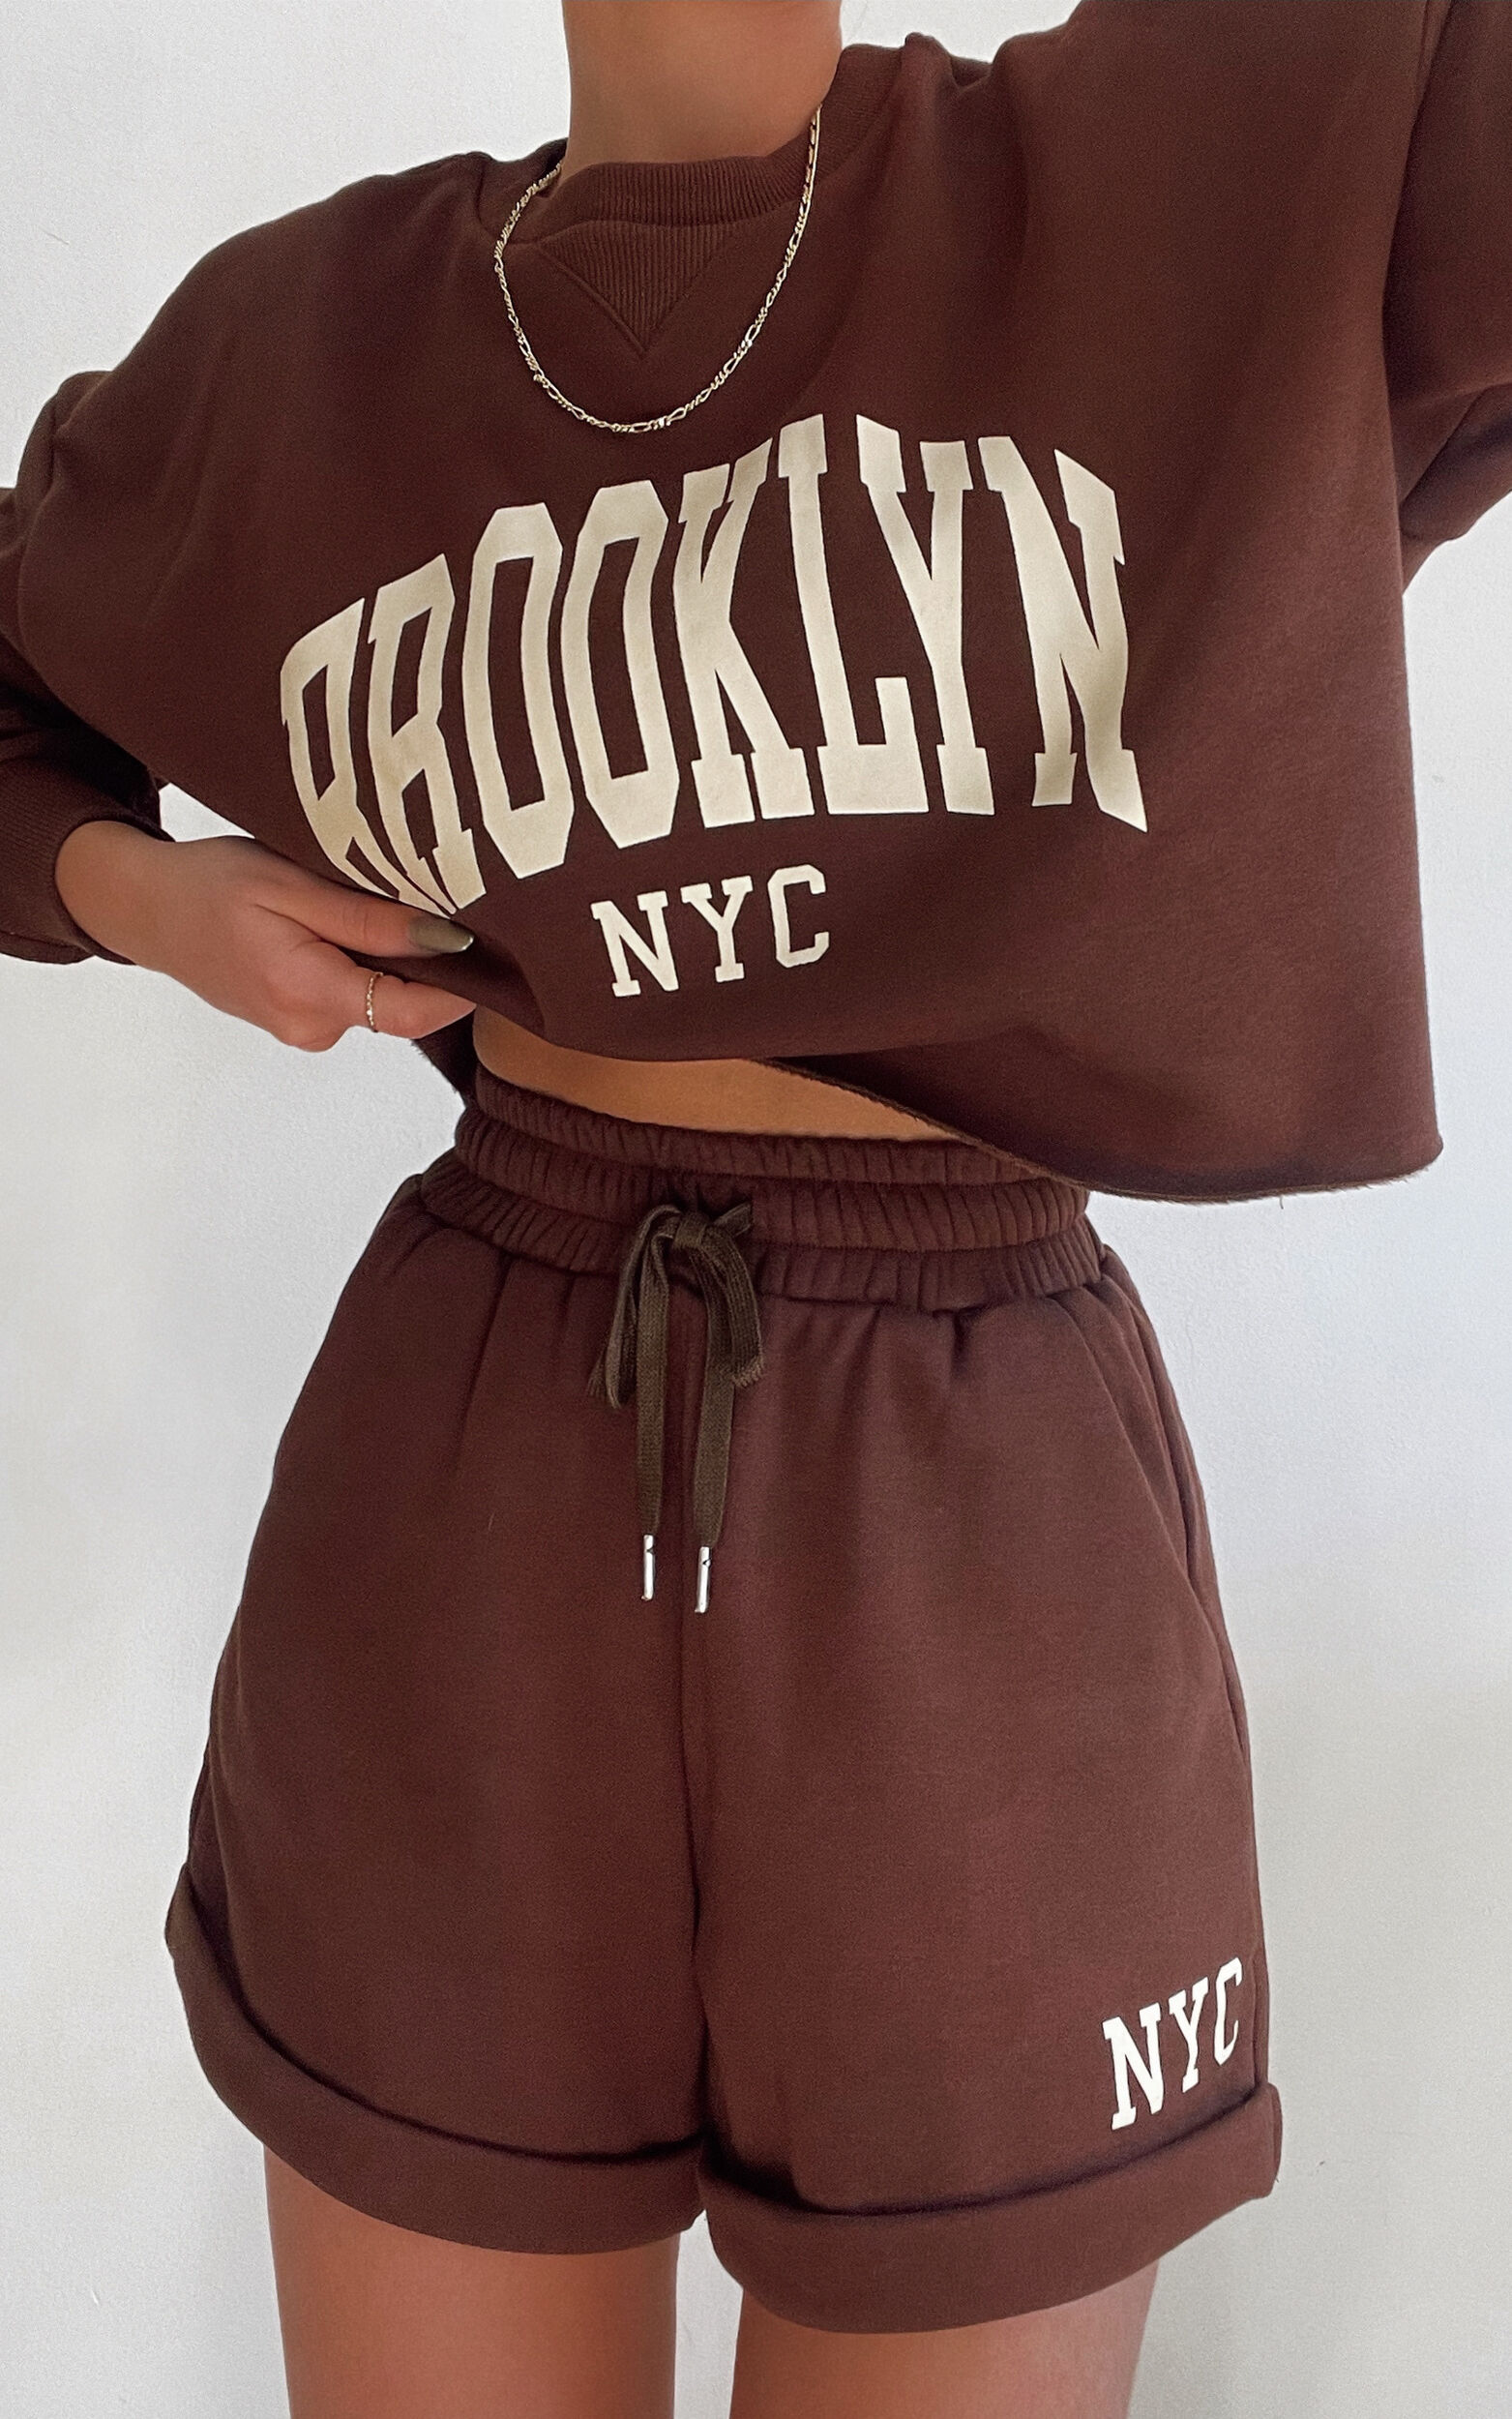 Sunday Society Club - Brooklyn NYC Crop Sweatshirt in Chocolate - 04, BRN1